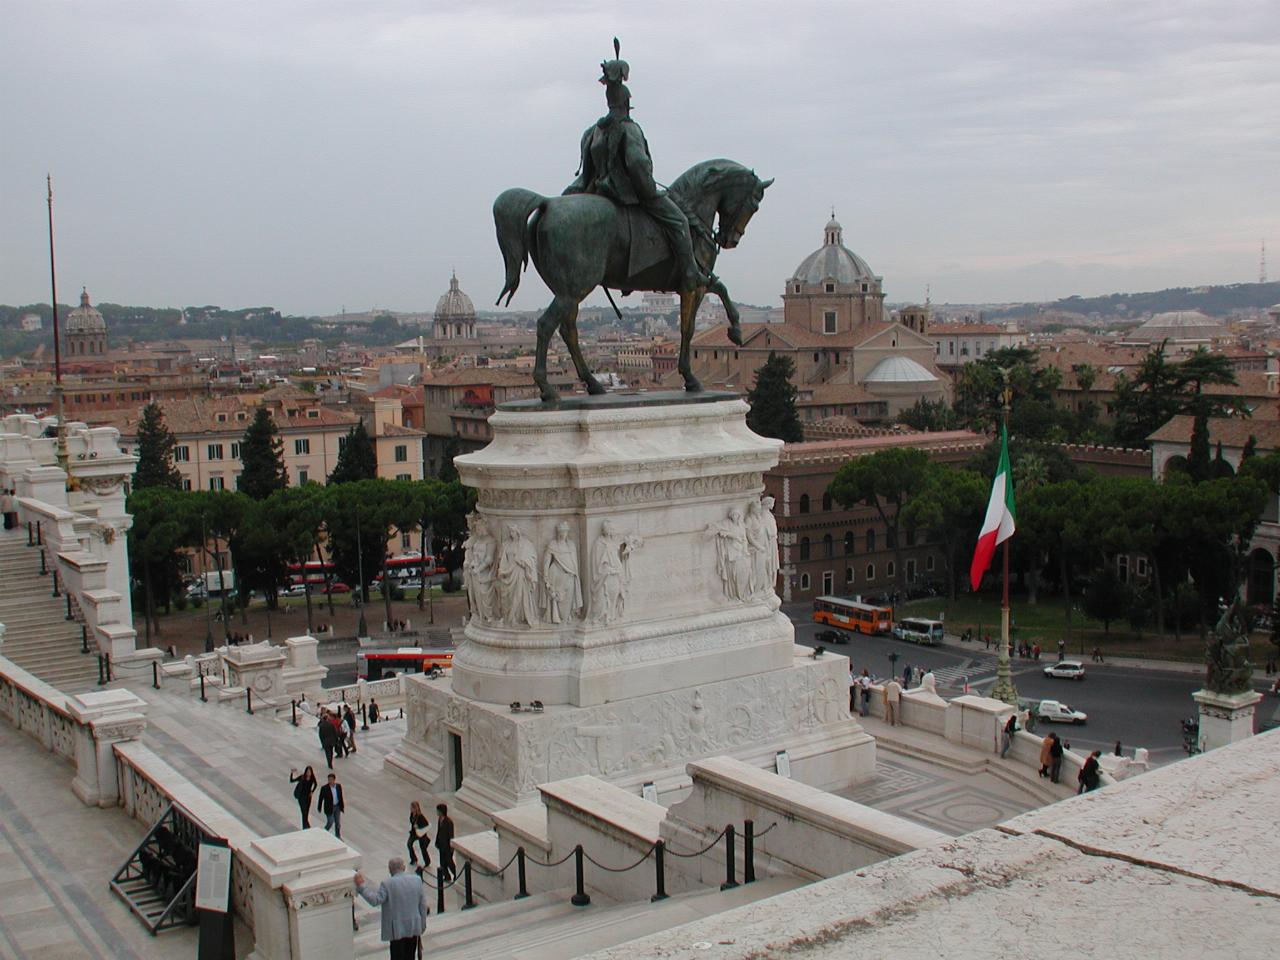 Victor Emmanuel II Monument overlooking Rome